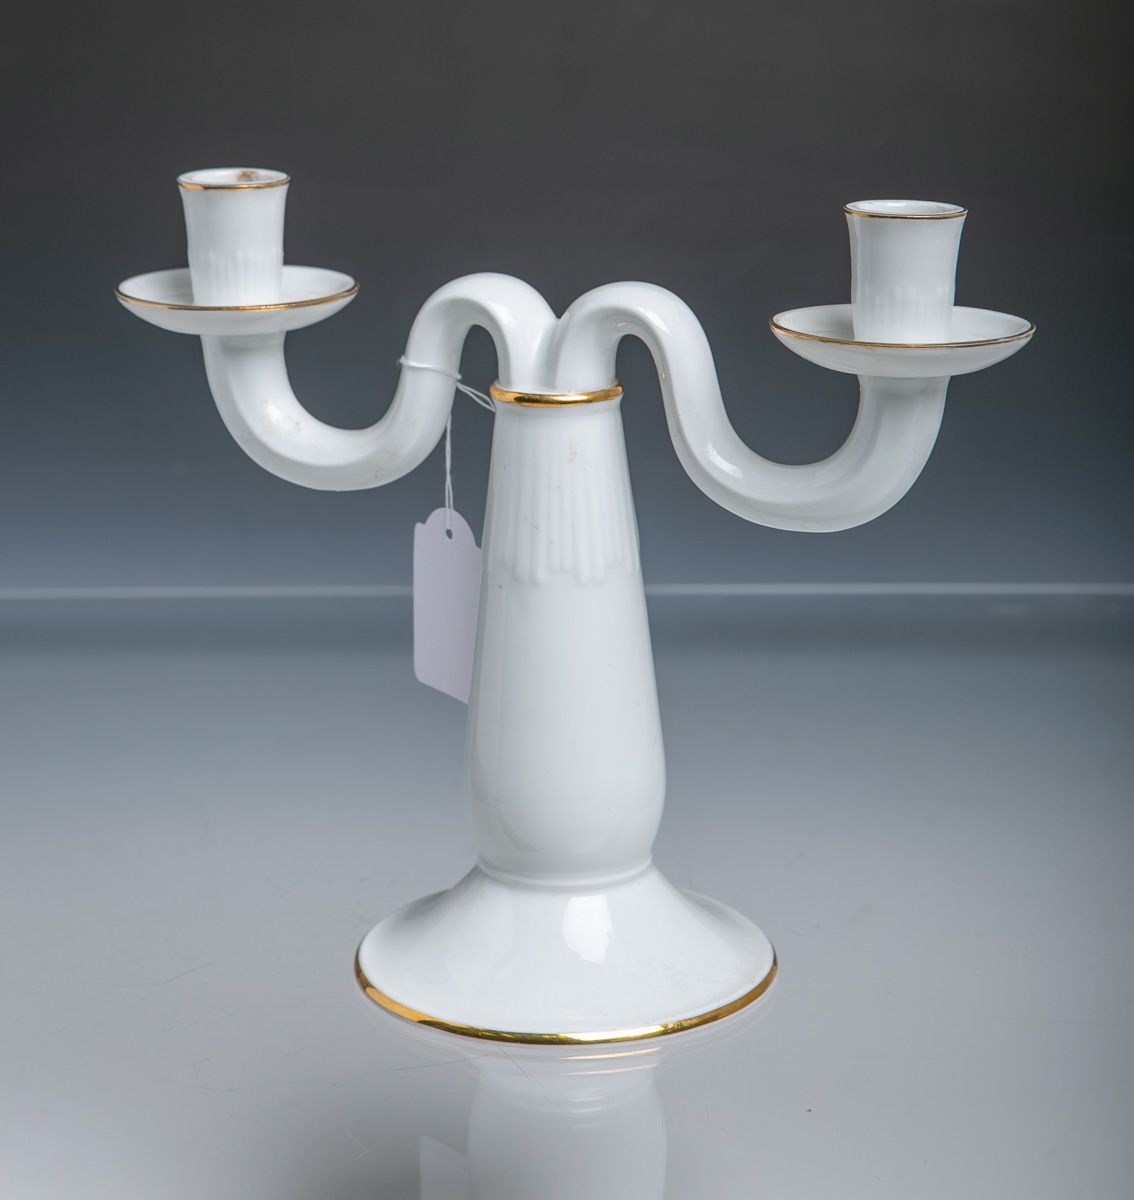 Null 双火烛台（迈森，大概20世纪），装饰艺术风格，白色，边缘涂有金色，高约20厘米，宽约23.5厘米。在烛台上修复。